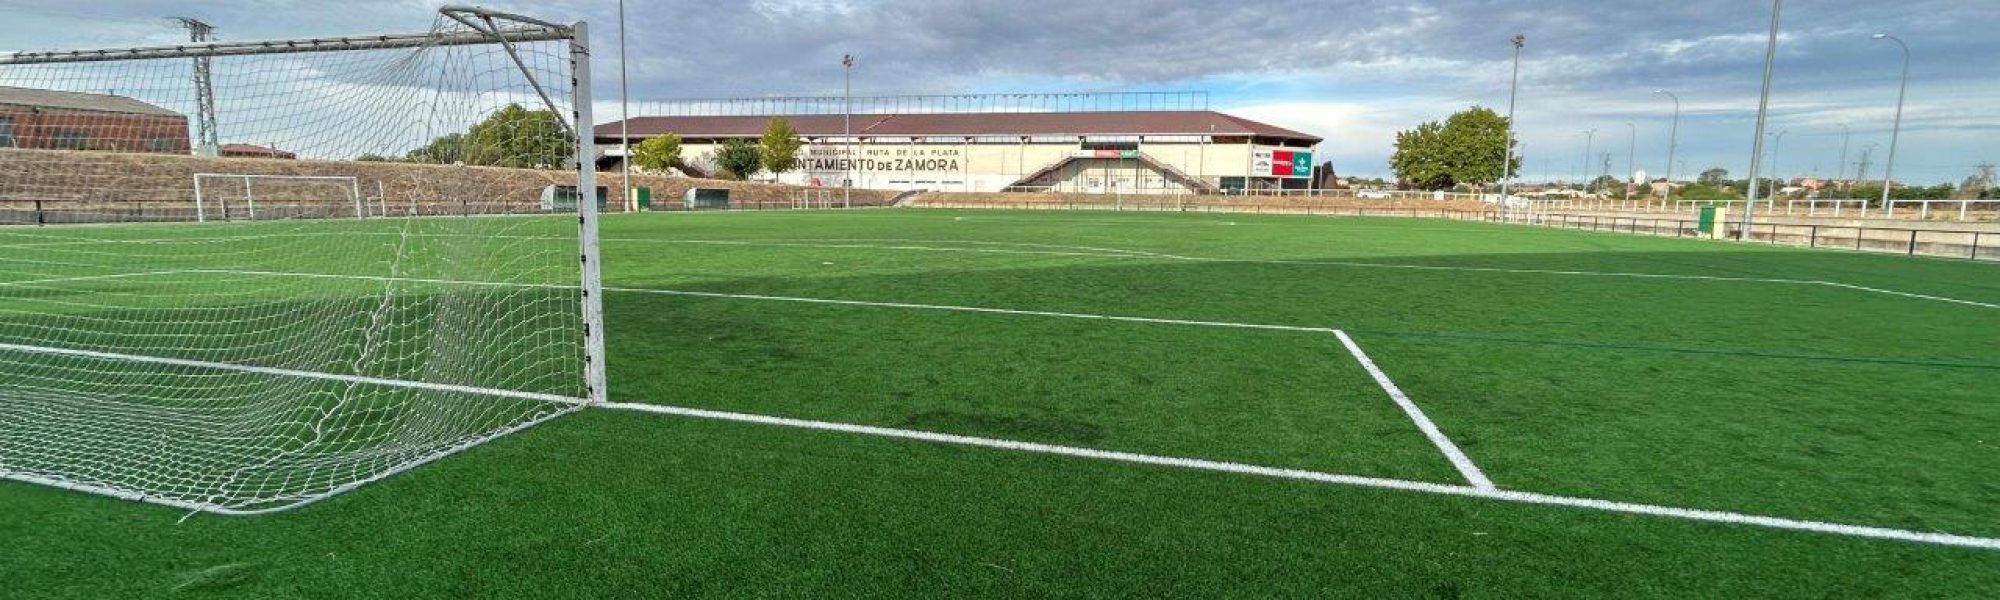 Campo anexo al Estadio Ruta de la Plata de Zamora, equipado con césped artificial DUAL XN PLUS de Mondo